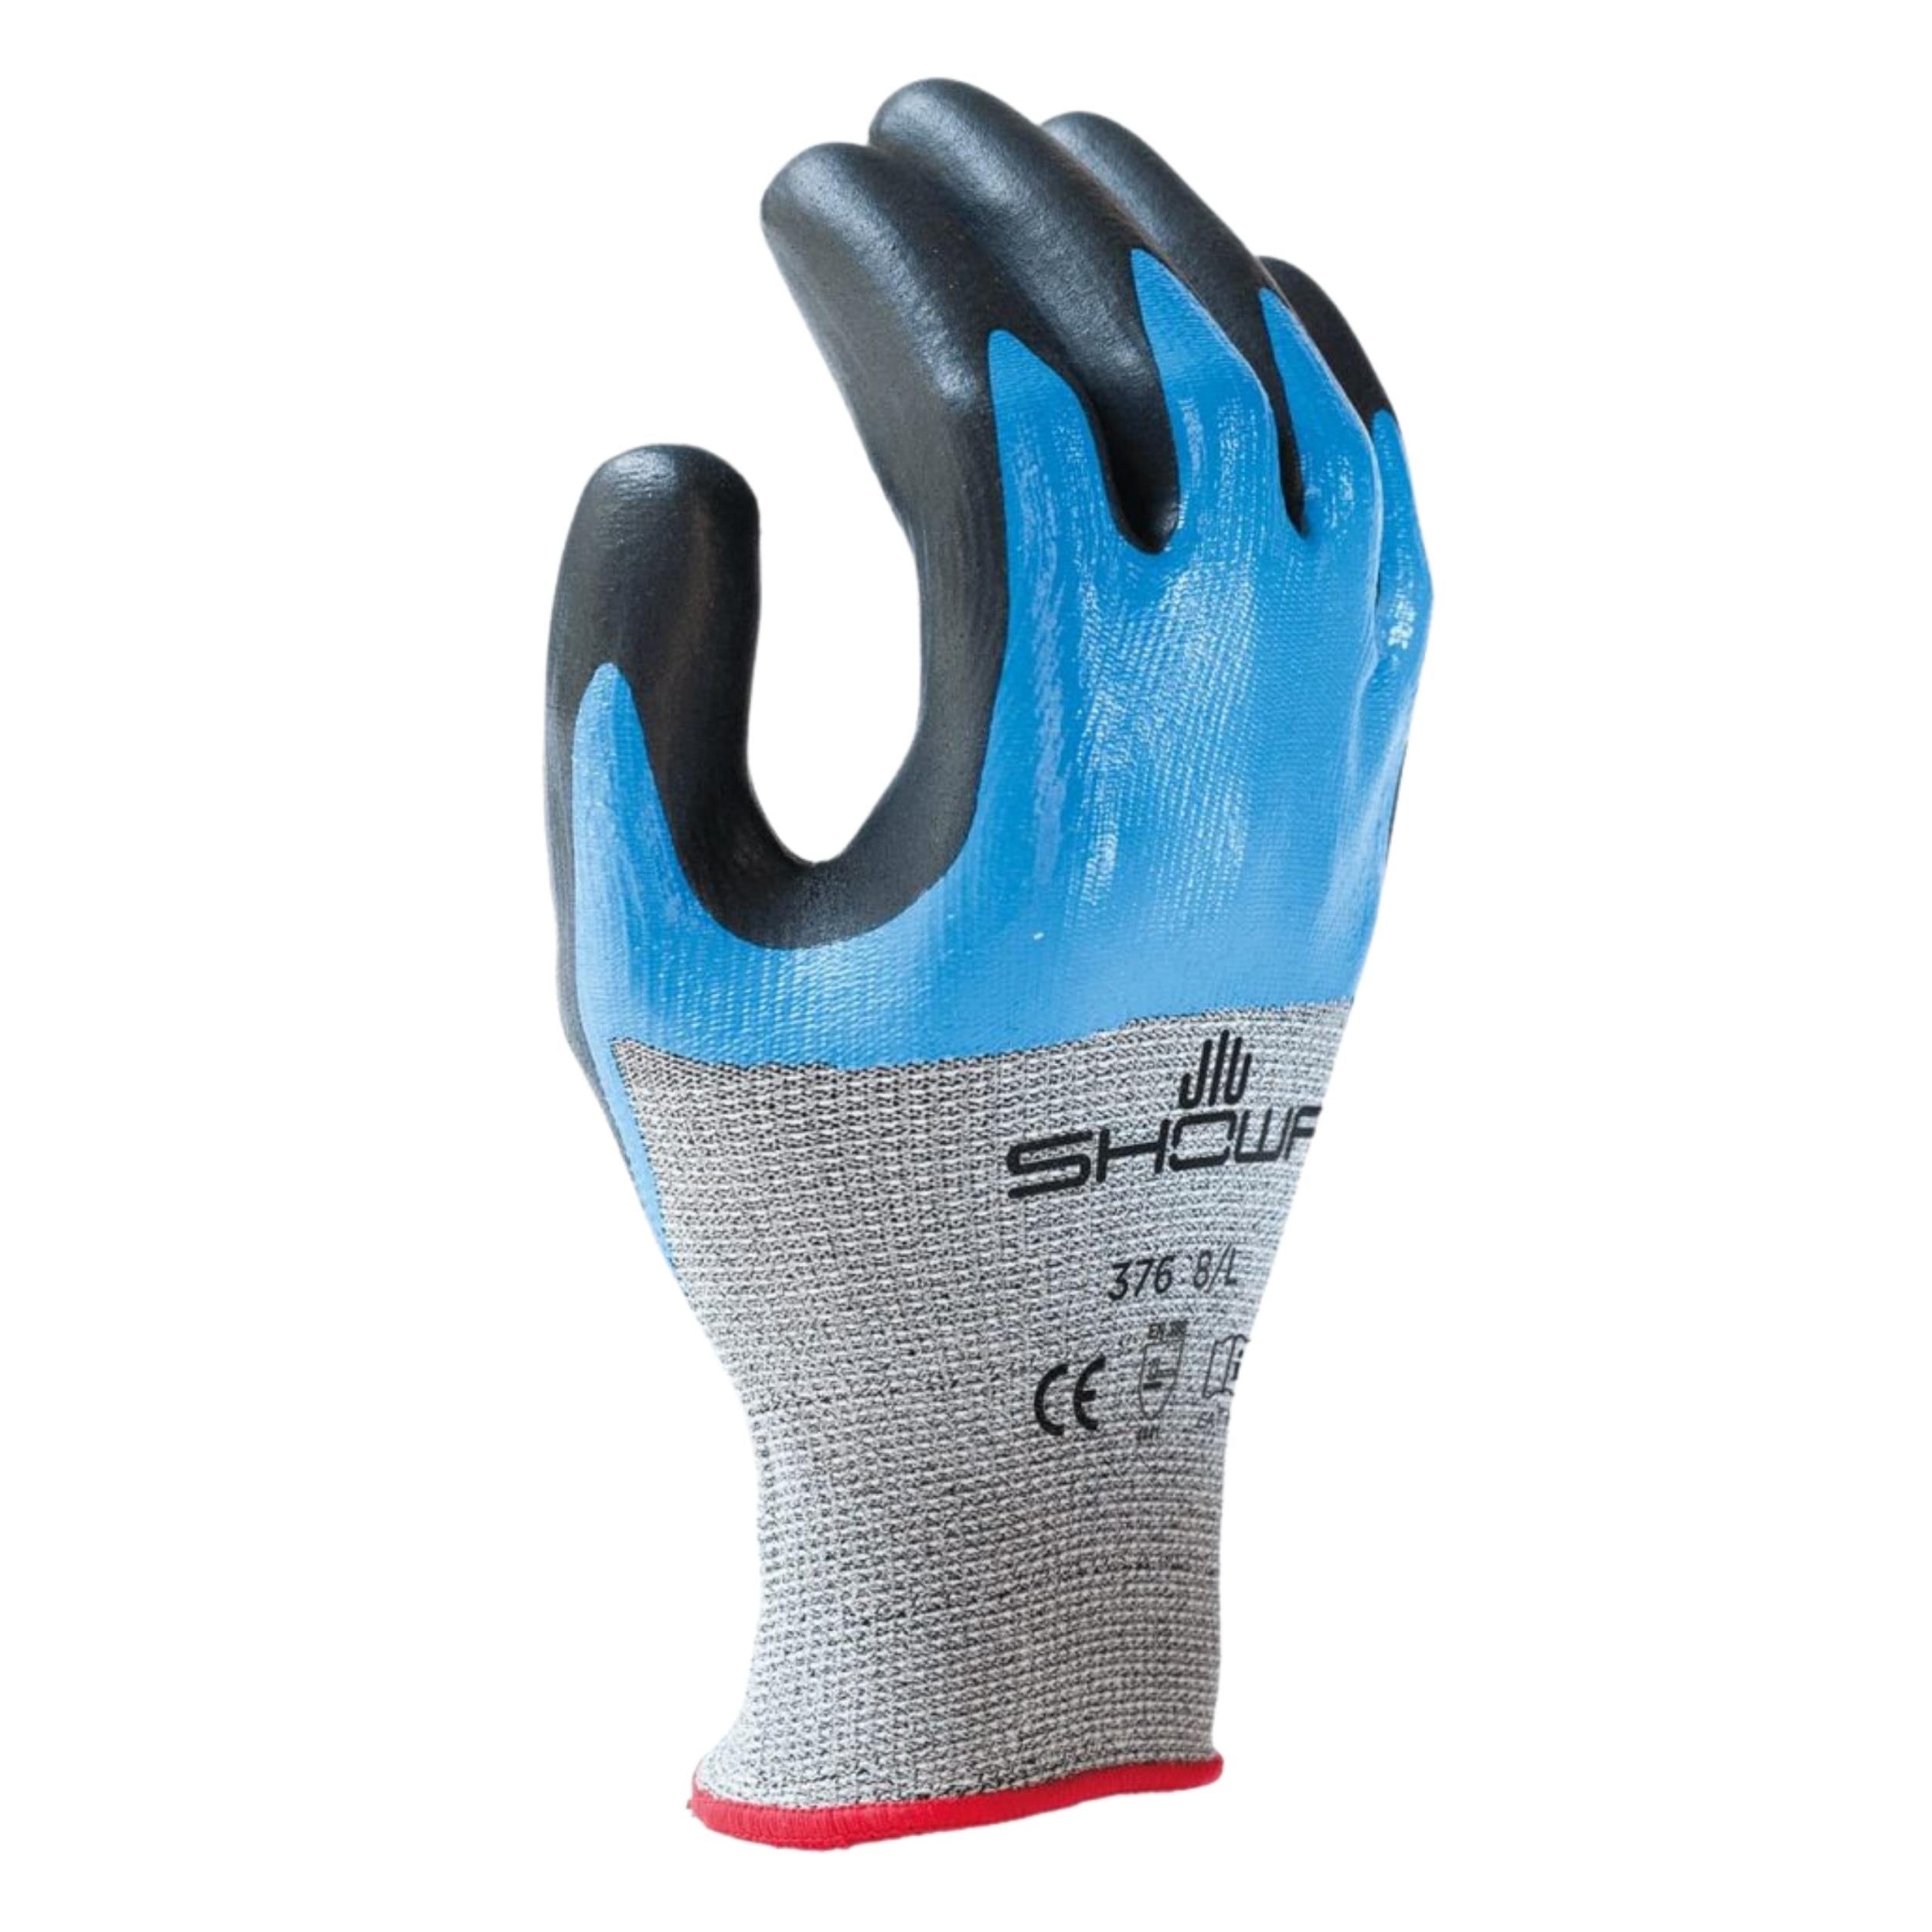 SHOWA 376 Liquid- resistant: General-purpose Gloves 6 Pack